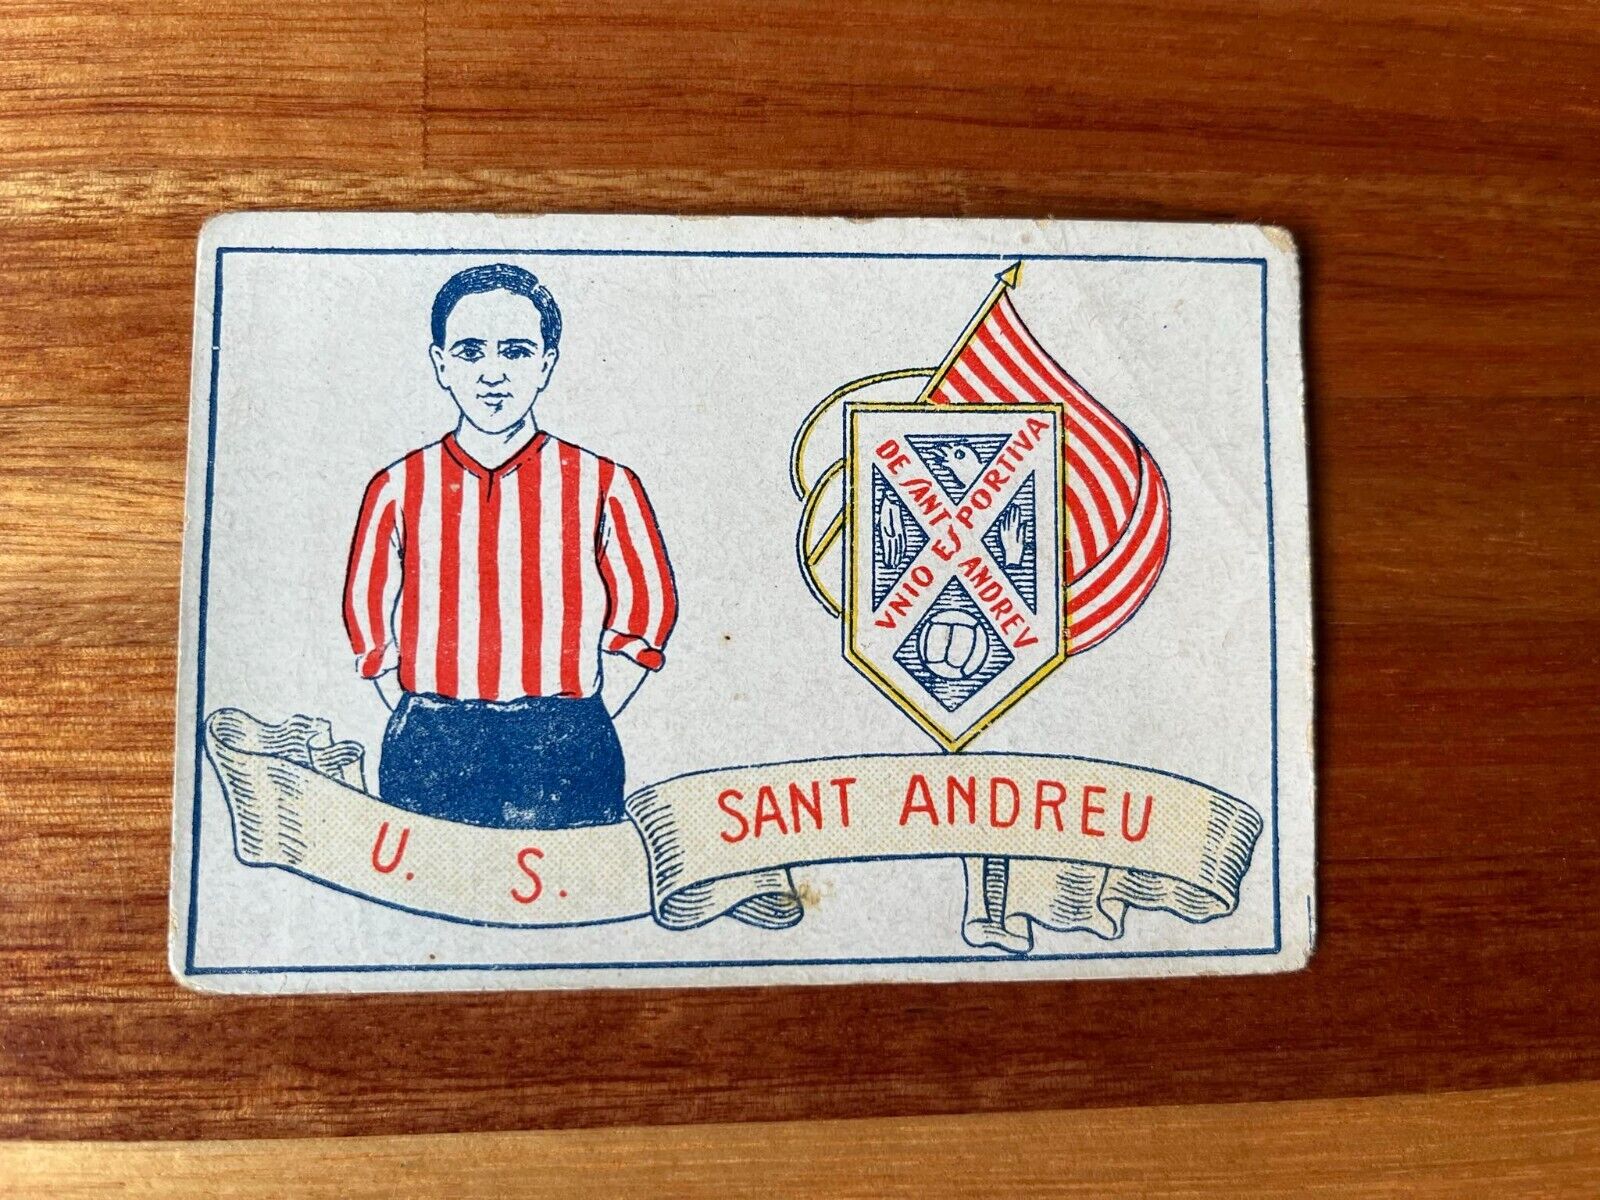 1929 España AMATLLER Chocolates tarjeta de fútbol UNIÓN DEPORTIVA DE SANT ANDREU